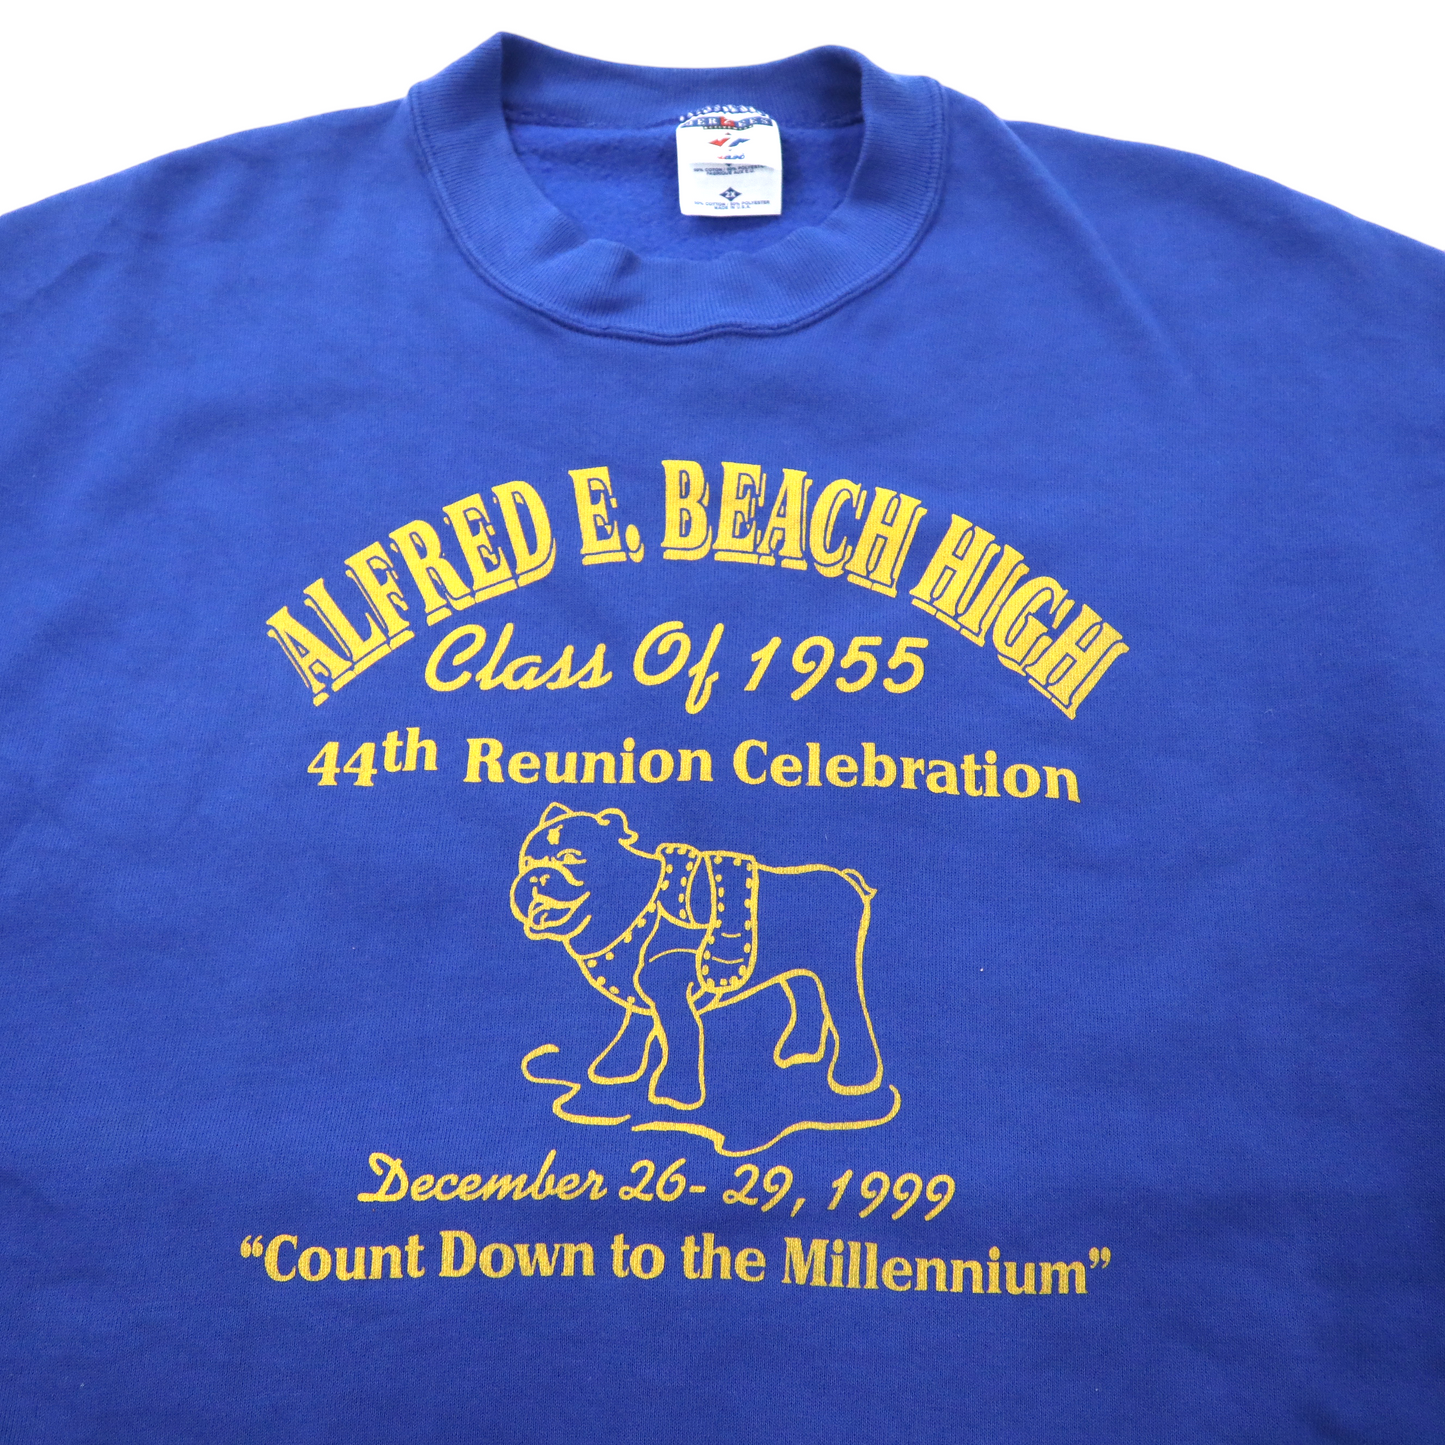 USA製 JERZEES ビッグサイズ カレッジプリント スウェット 2X ブルー コットン 裏起毛 ALFRED E. BEACH HIGH 90年代